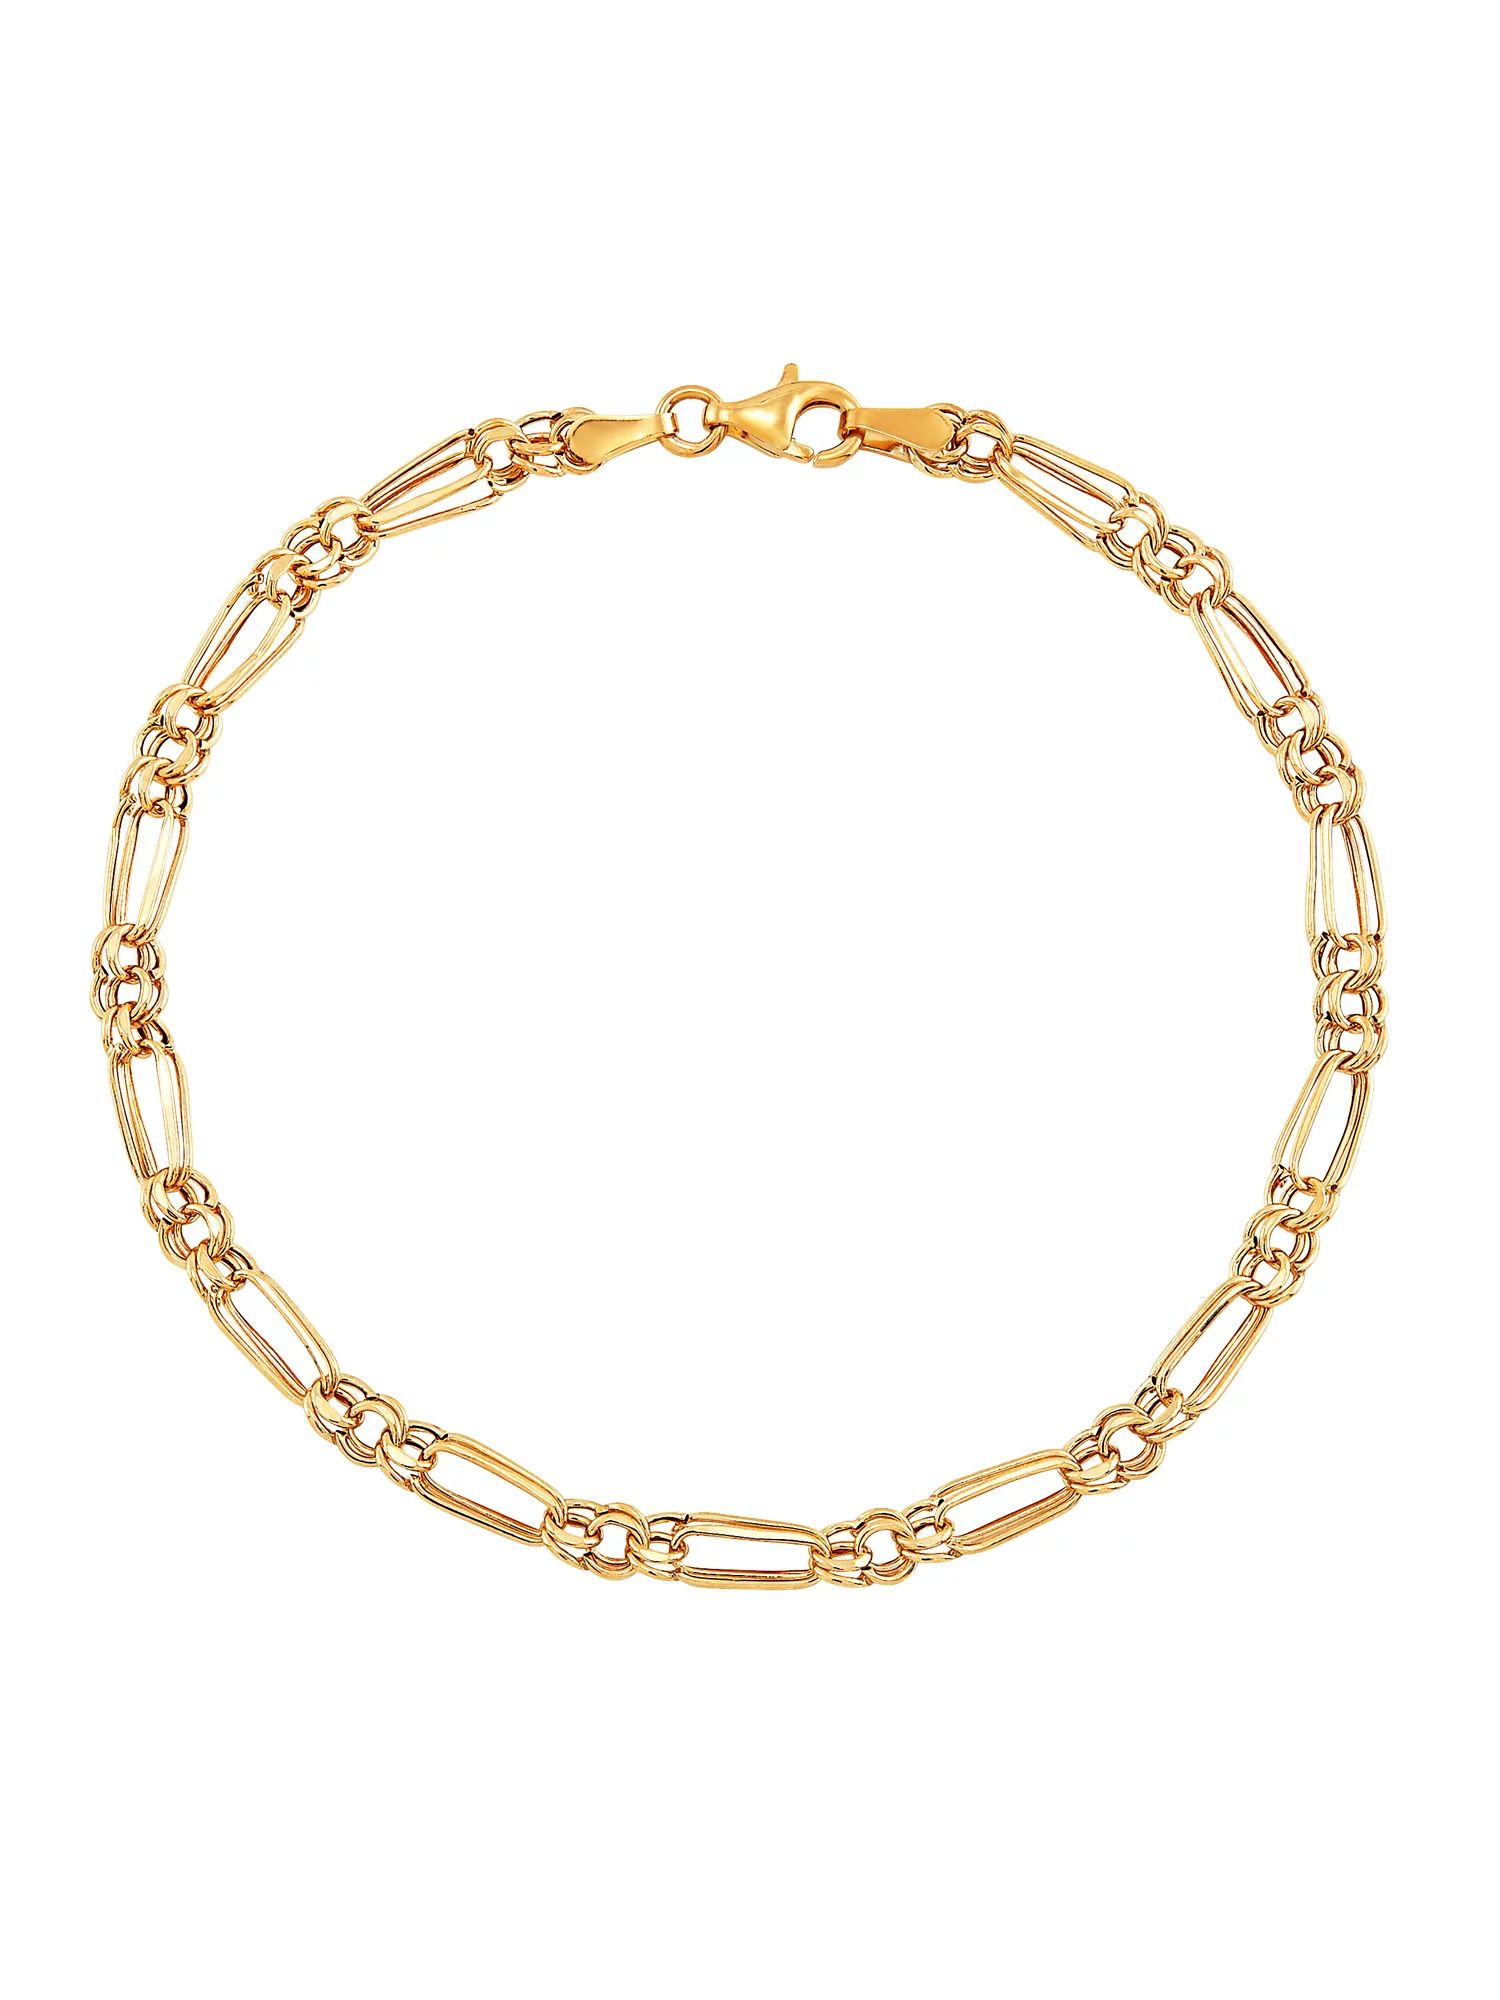 Brilliance Fine Jewelry 10K Yellow Gold Alternating Oval and Round Links Bracelet, 7.5" | Walmart (US)